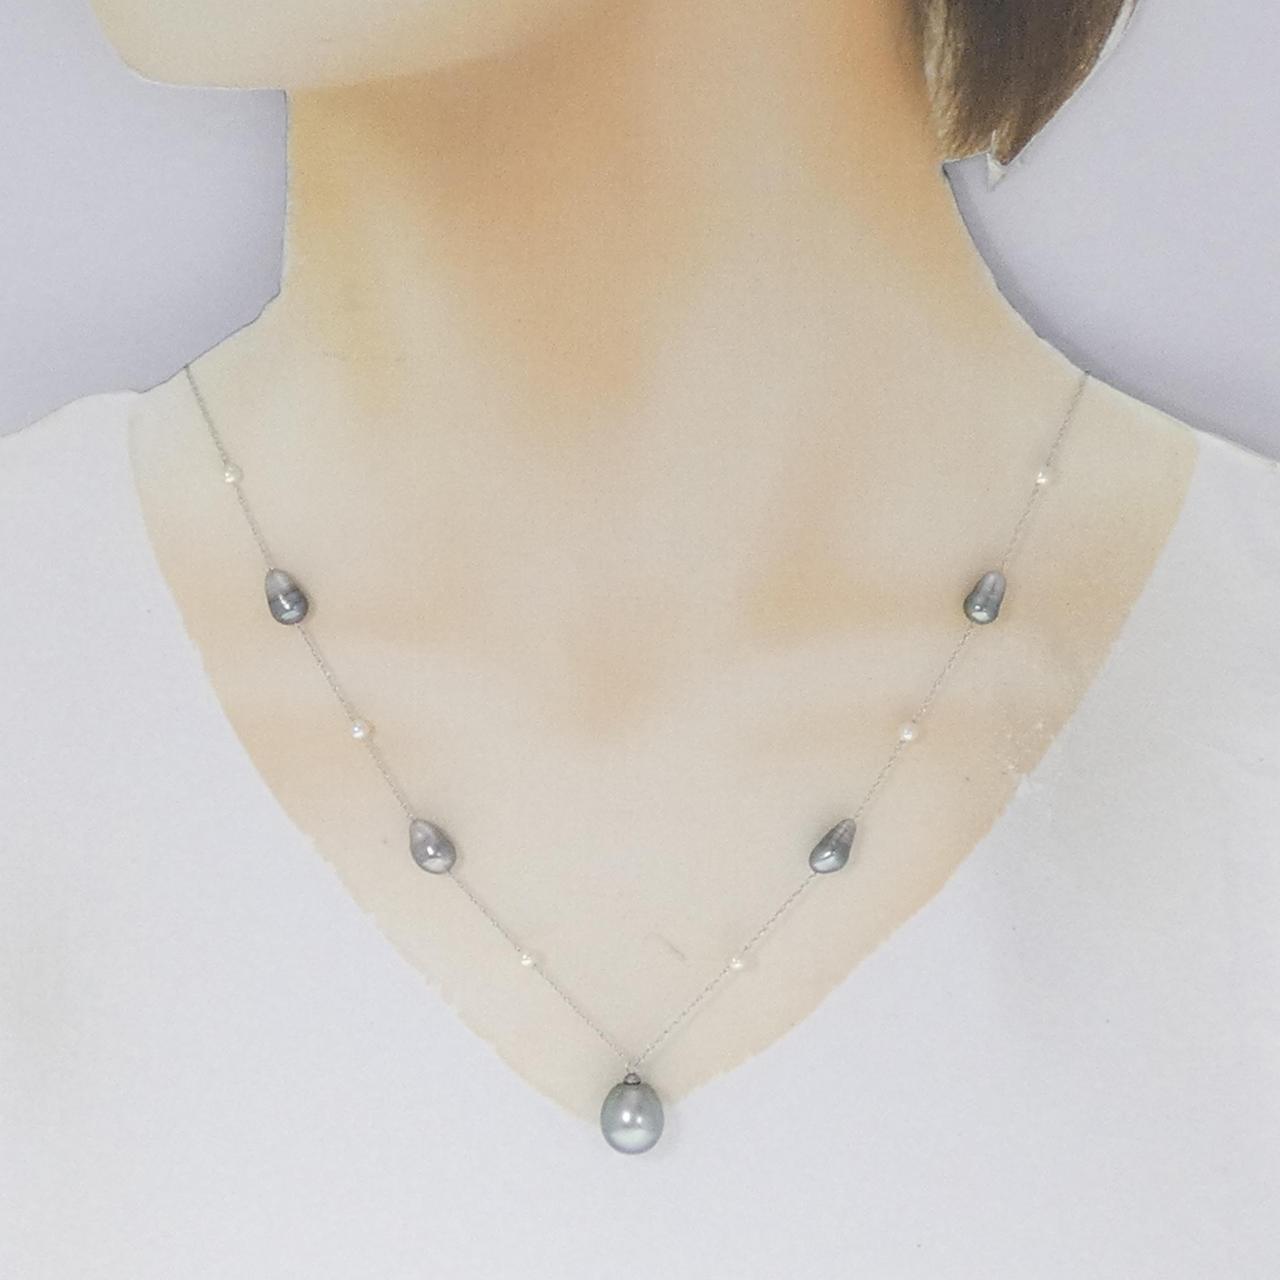 585WG Black Pearl Necklace